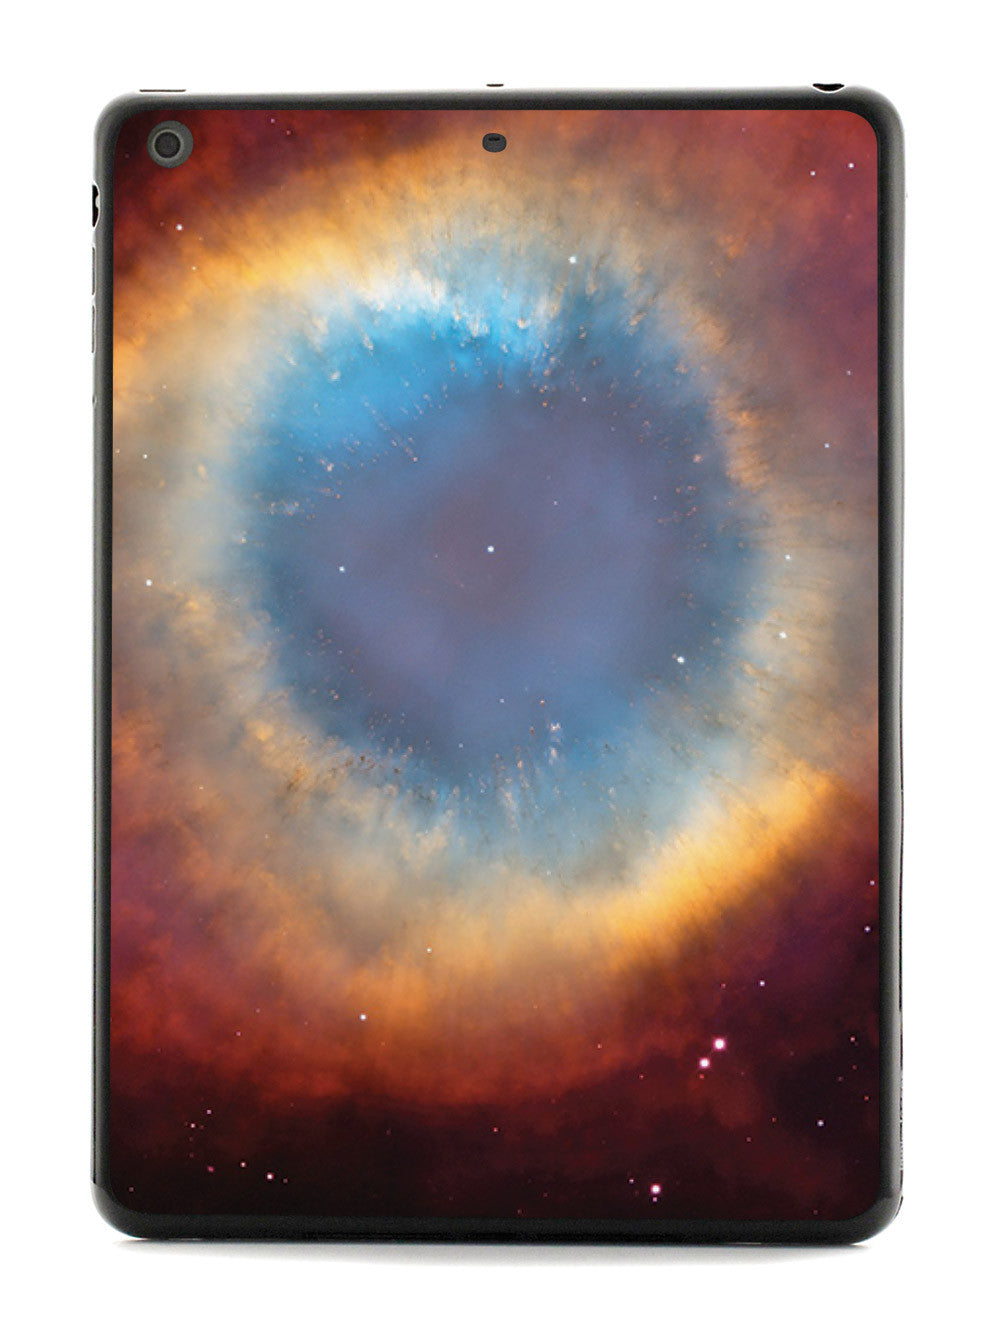 Helix Nebula Vs. 2 Outer Space Planetary Eye of God Case